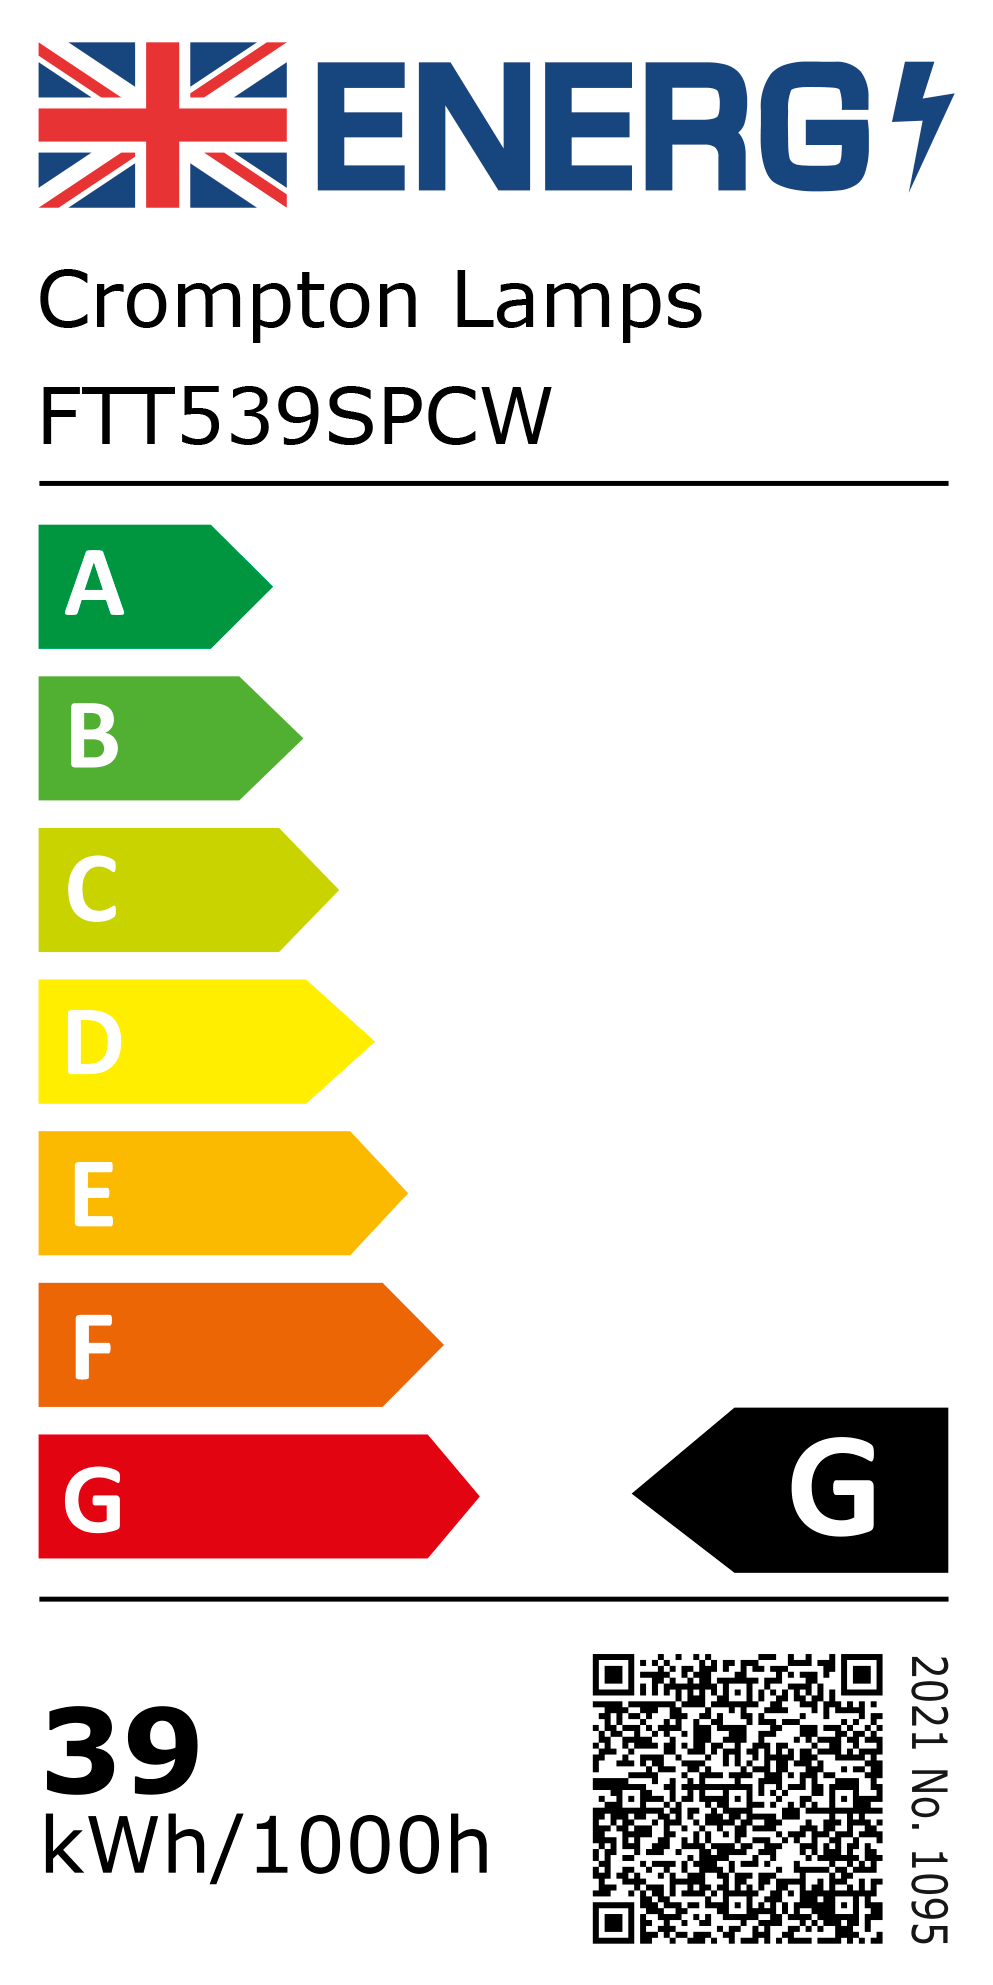 New 2021 Energy Rating Label: Stock Code FTT539SPCW